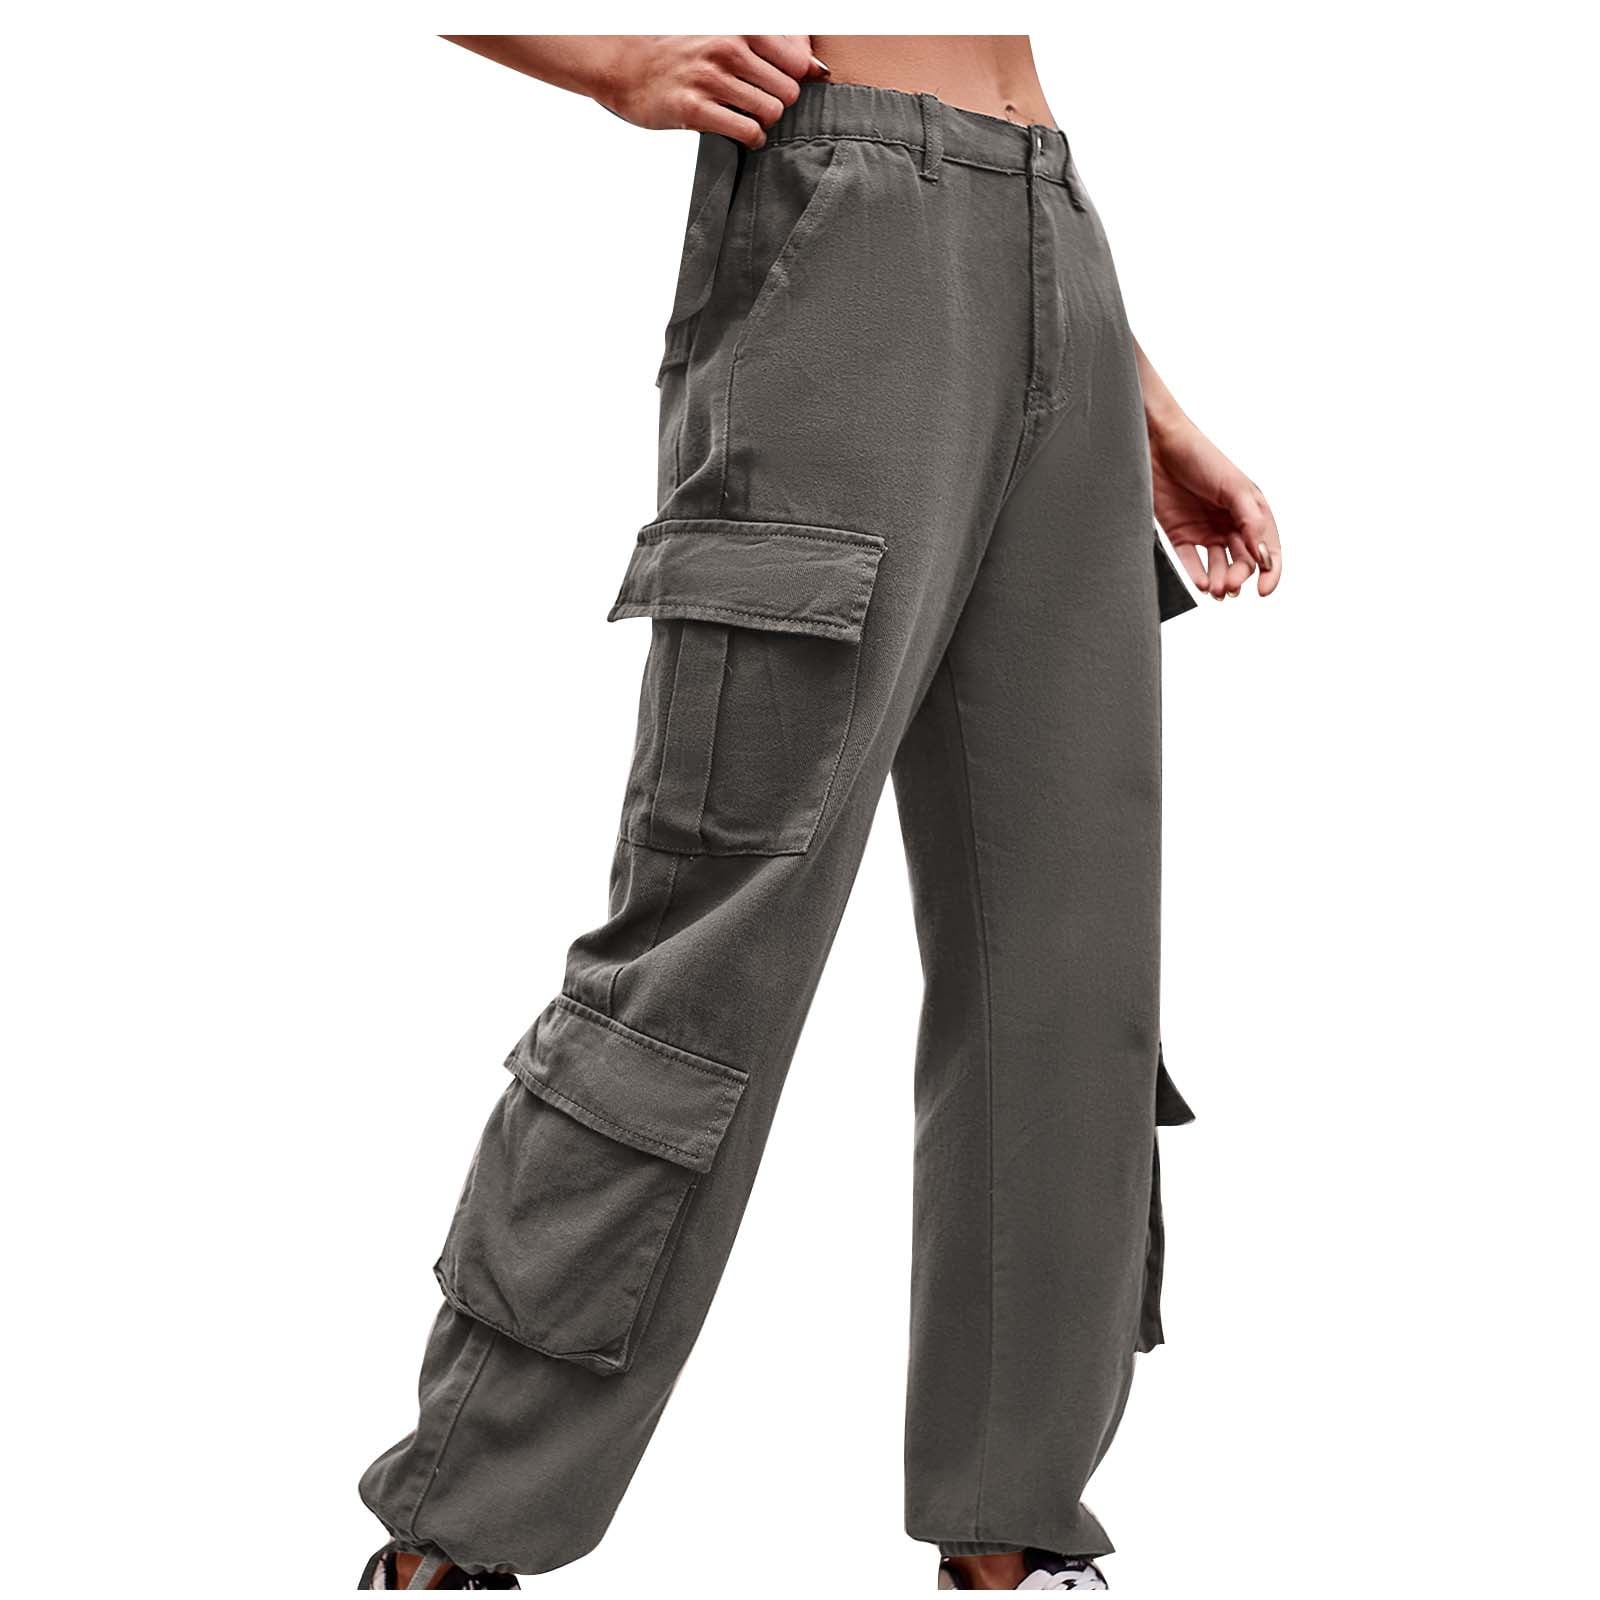 Mrat Cargo Sweatpants for Women Baggy Cargo Pants for Women Cotton